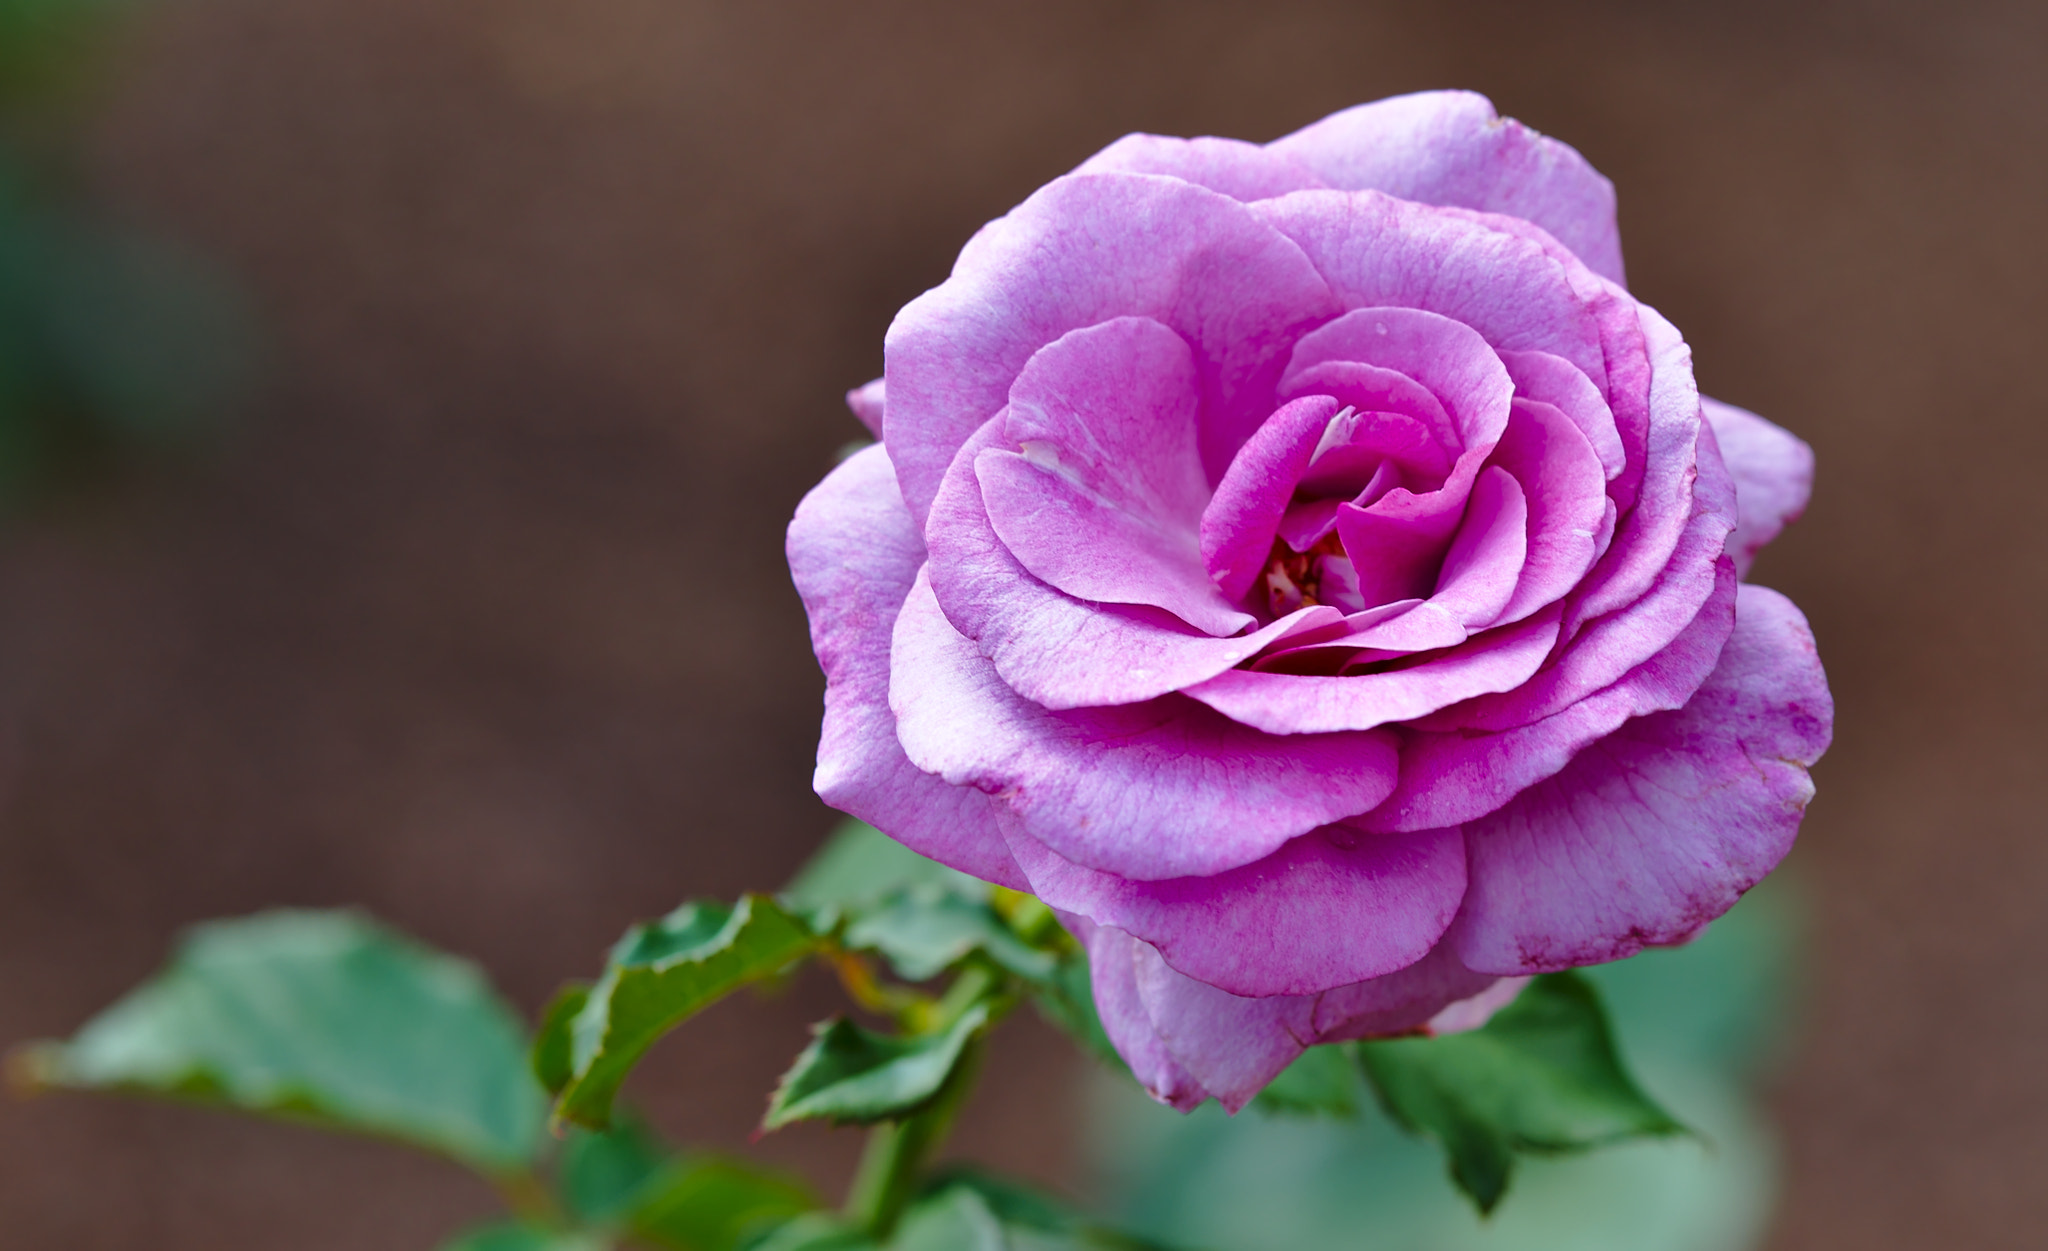 ZEISS Otus 85mm F1.4 sample photo. A pink hybrid tea rose photography